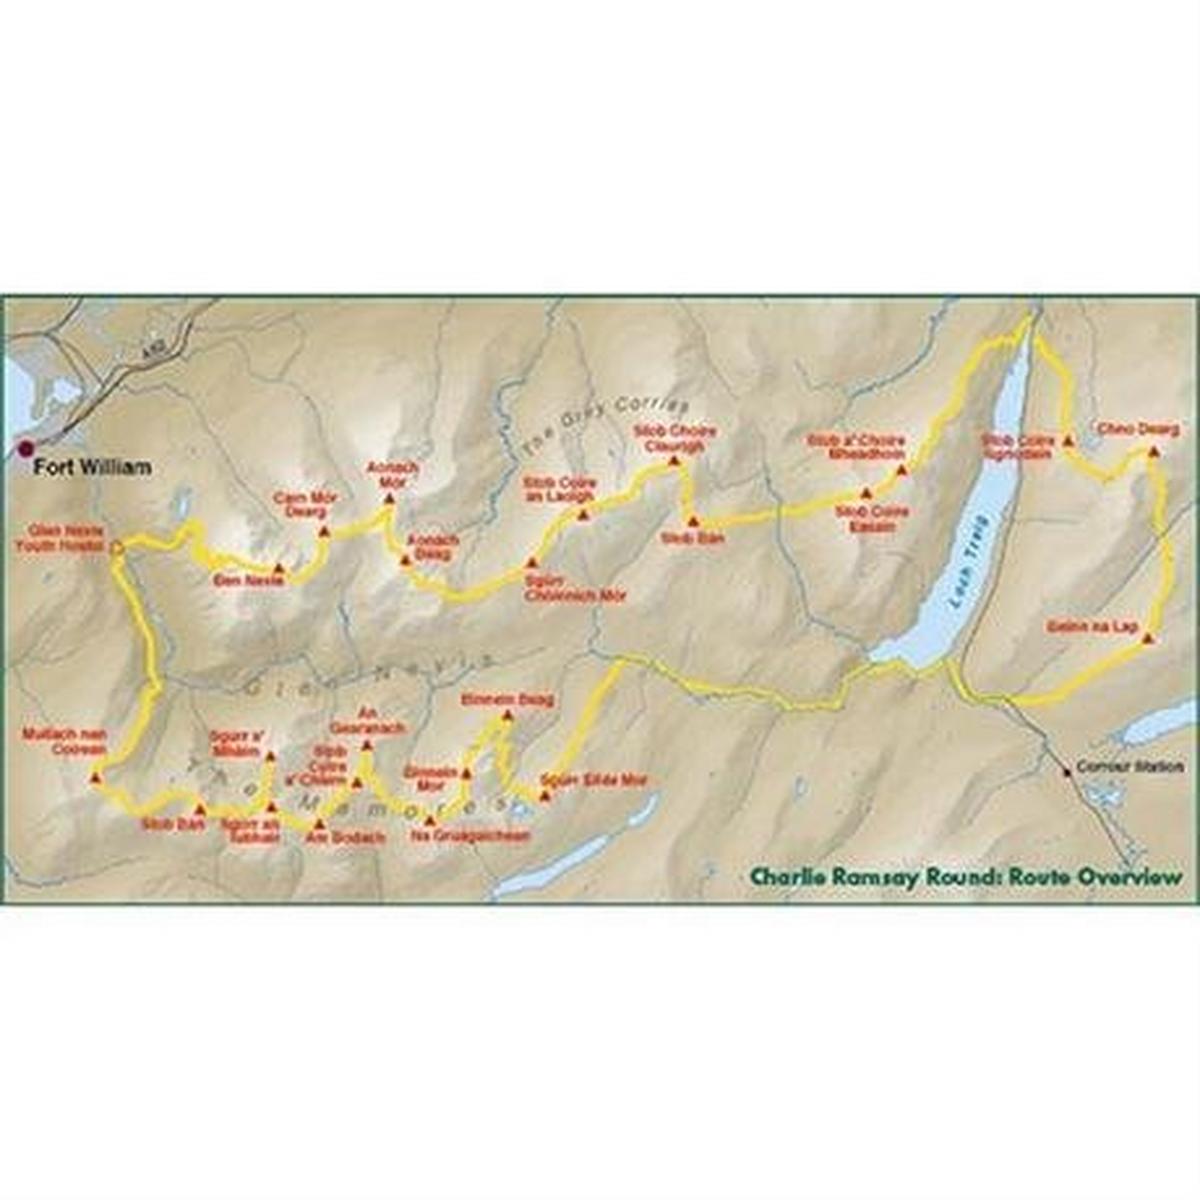 Harveys Harvey Map: Charlie Ramsay Round